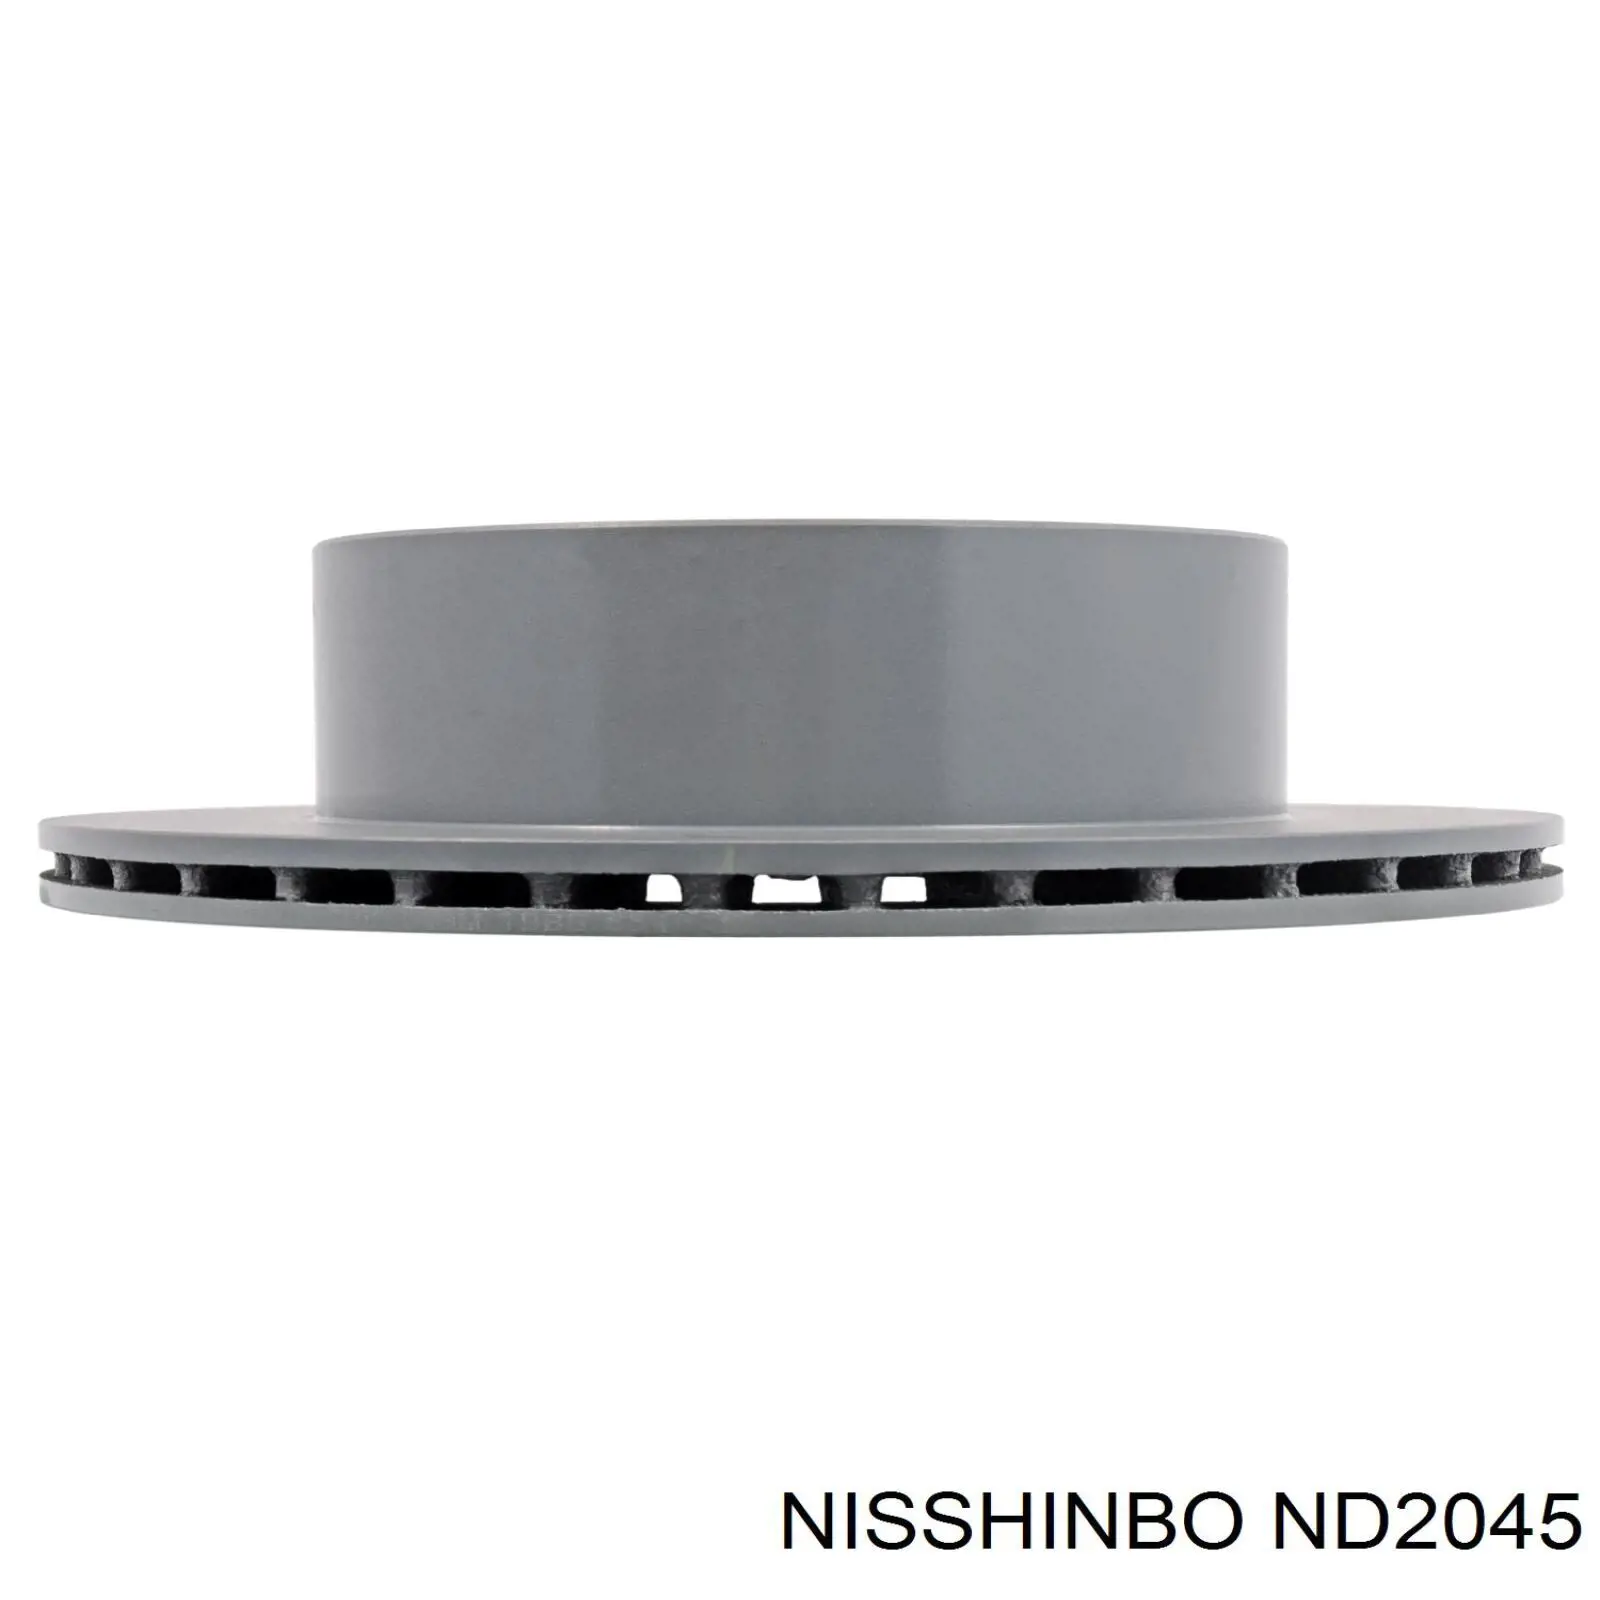 ND2045 Nisshinbo диск тормозной задний